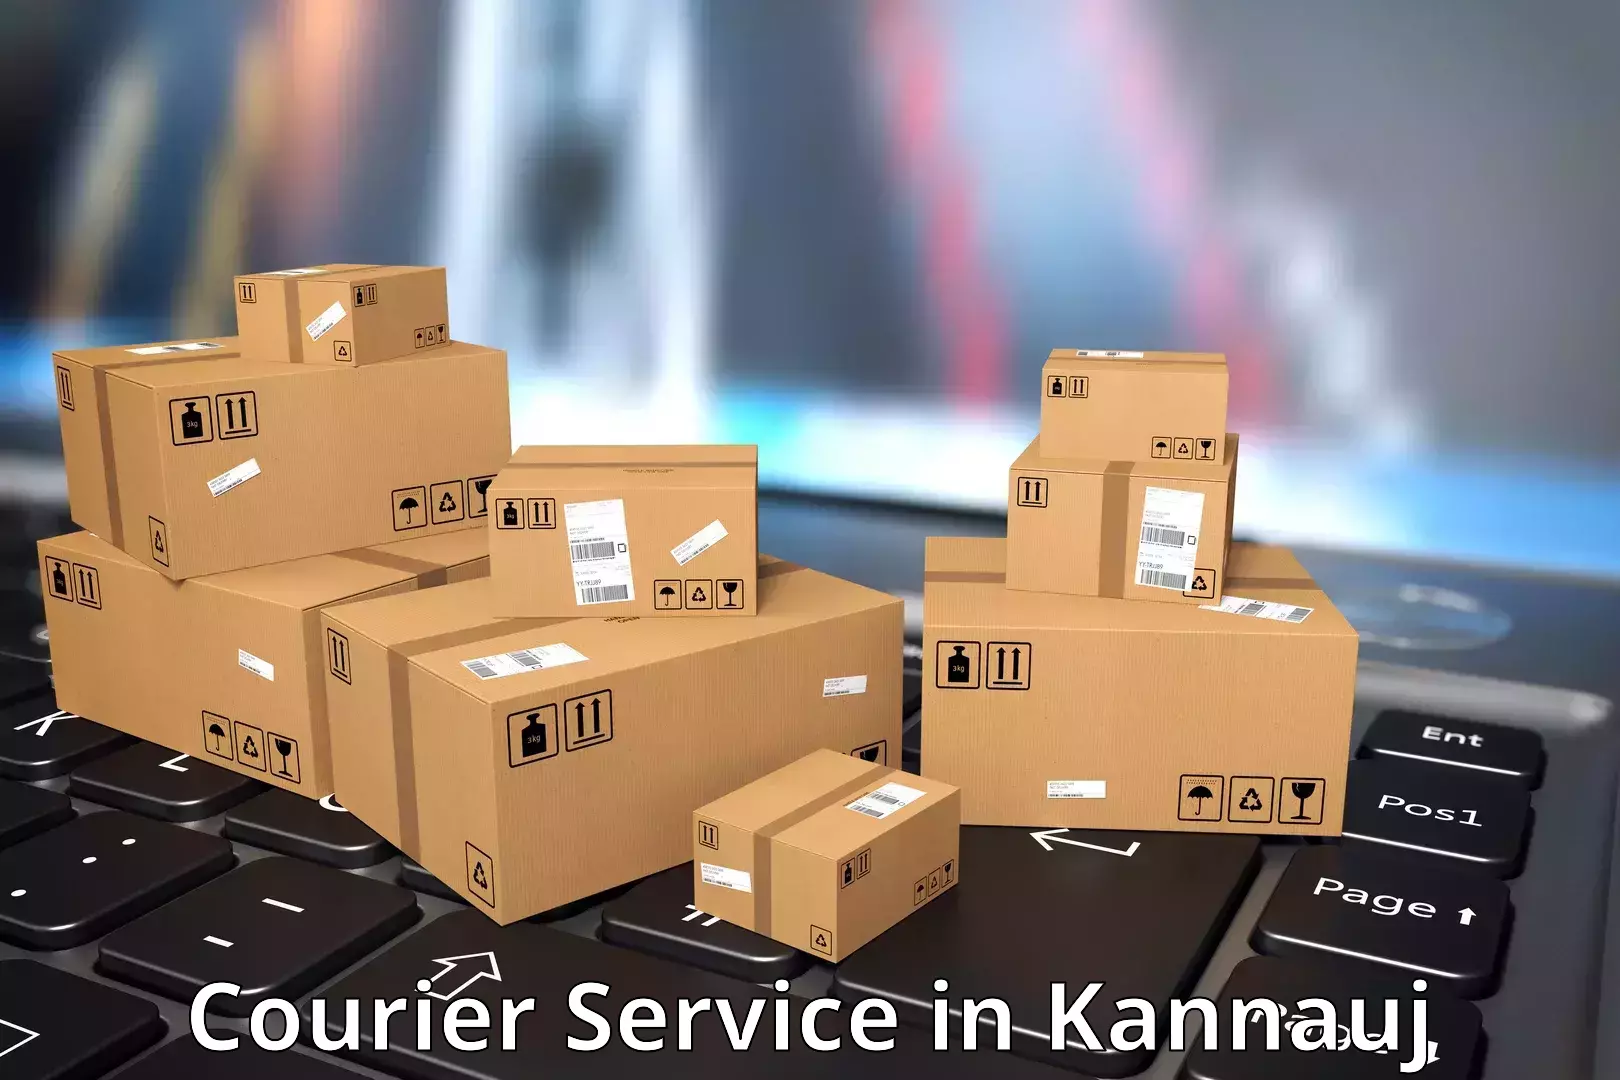 Express mail service in Kannauj